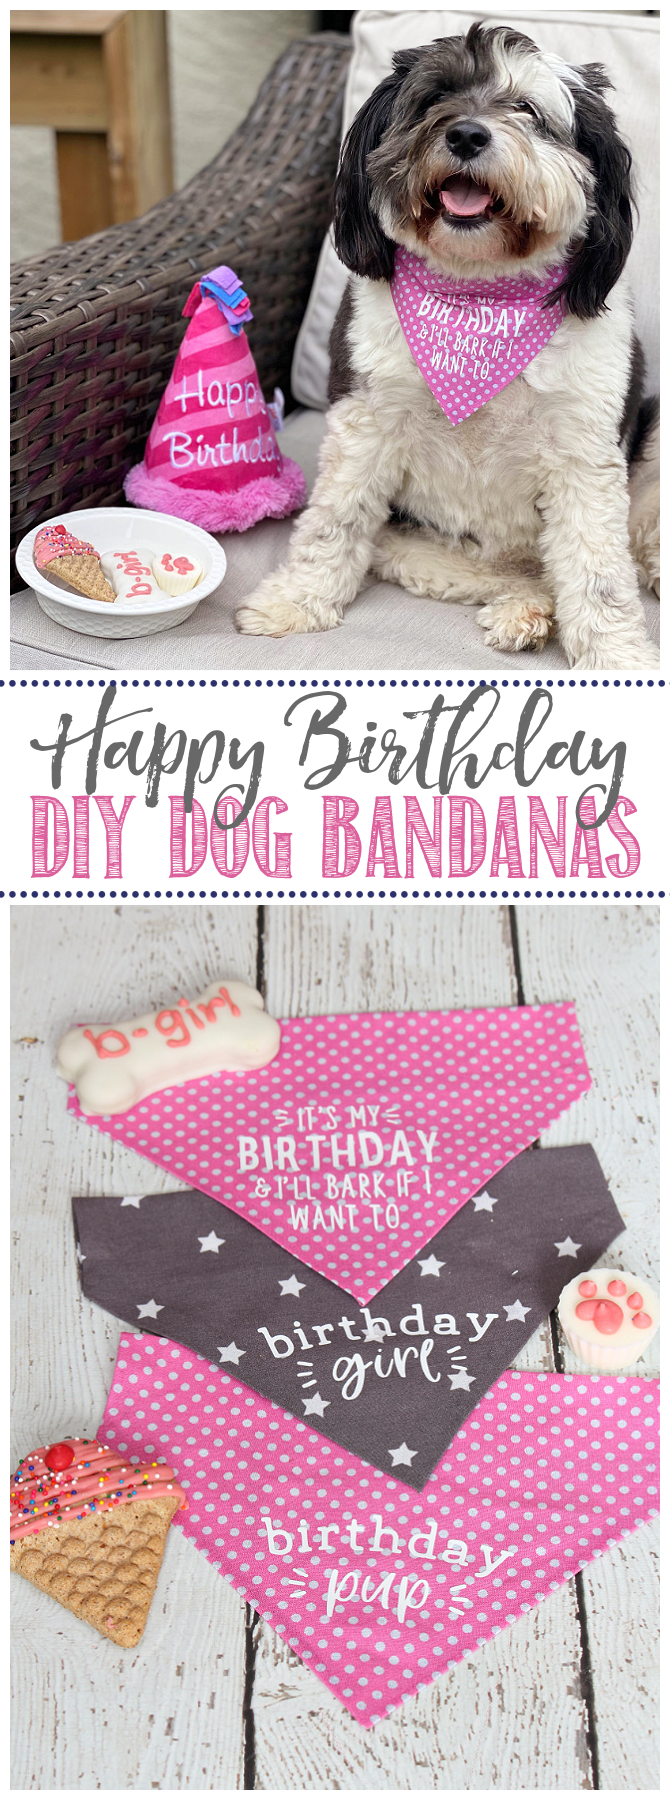 Birthday dog bandanas in three designs.